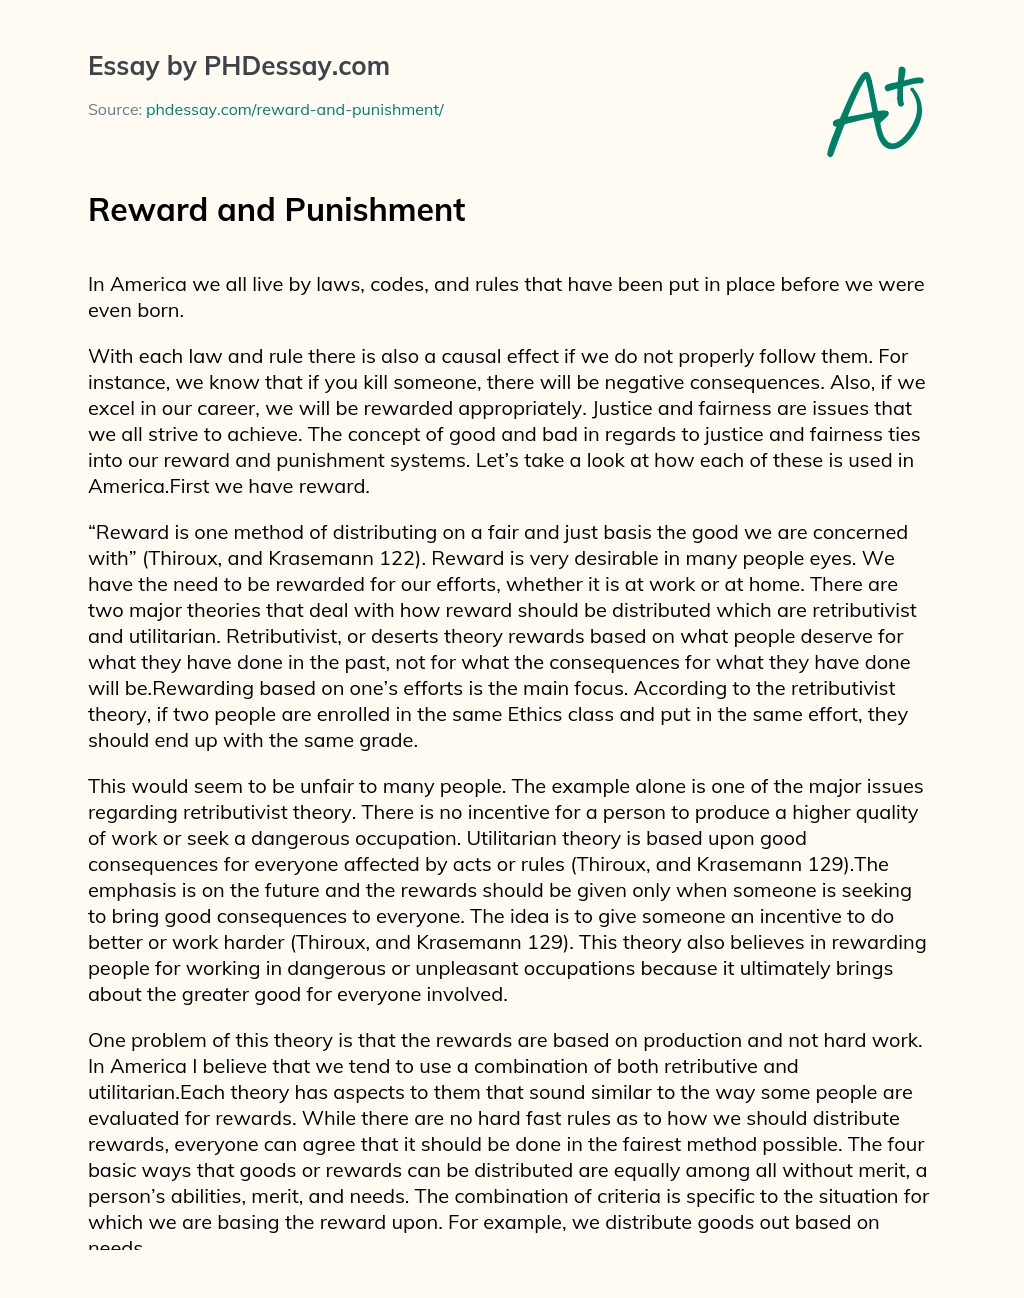 Reward and Punishment essay